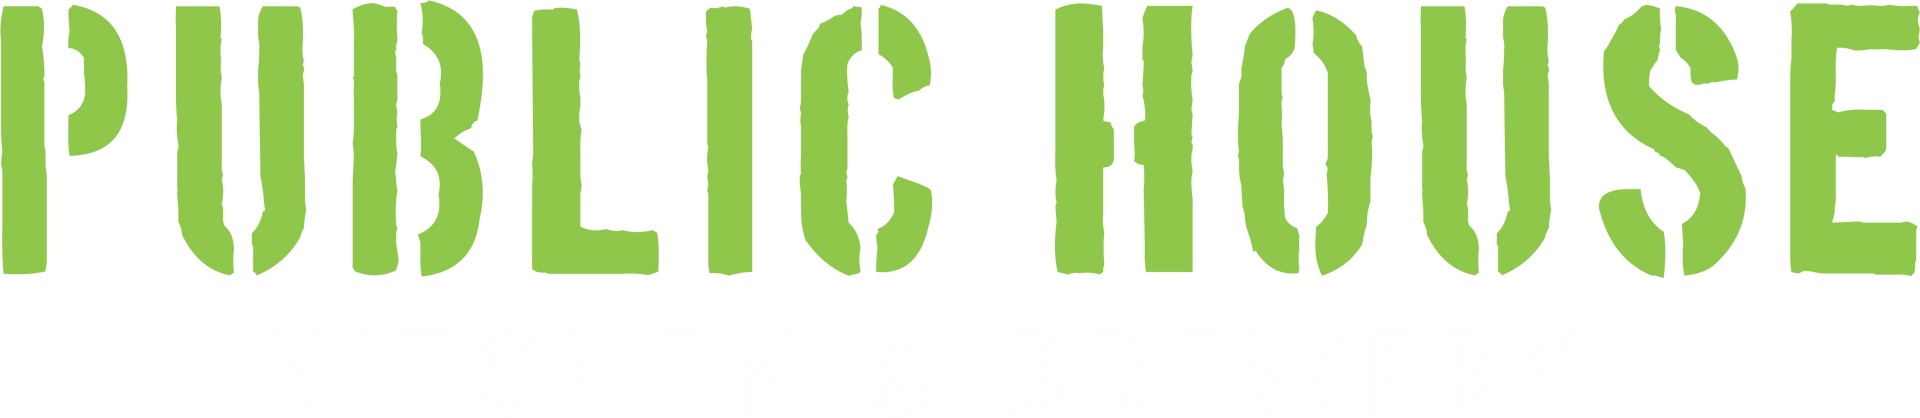 Public House Kitchen & Brewery Text Logo